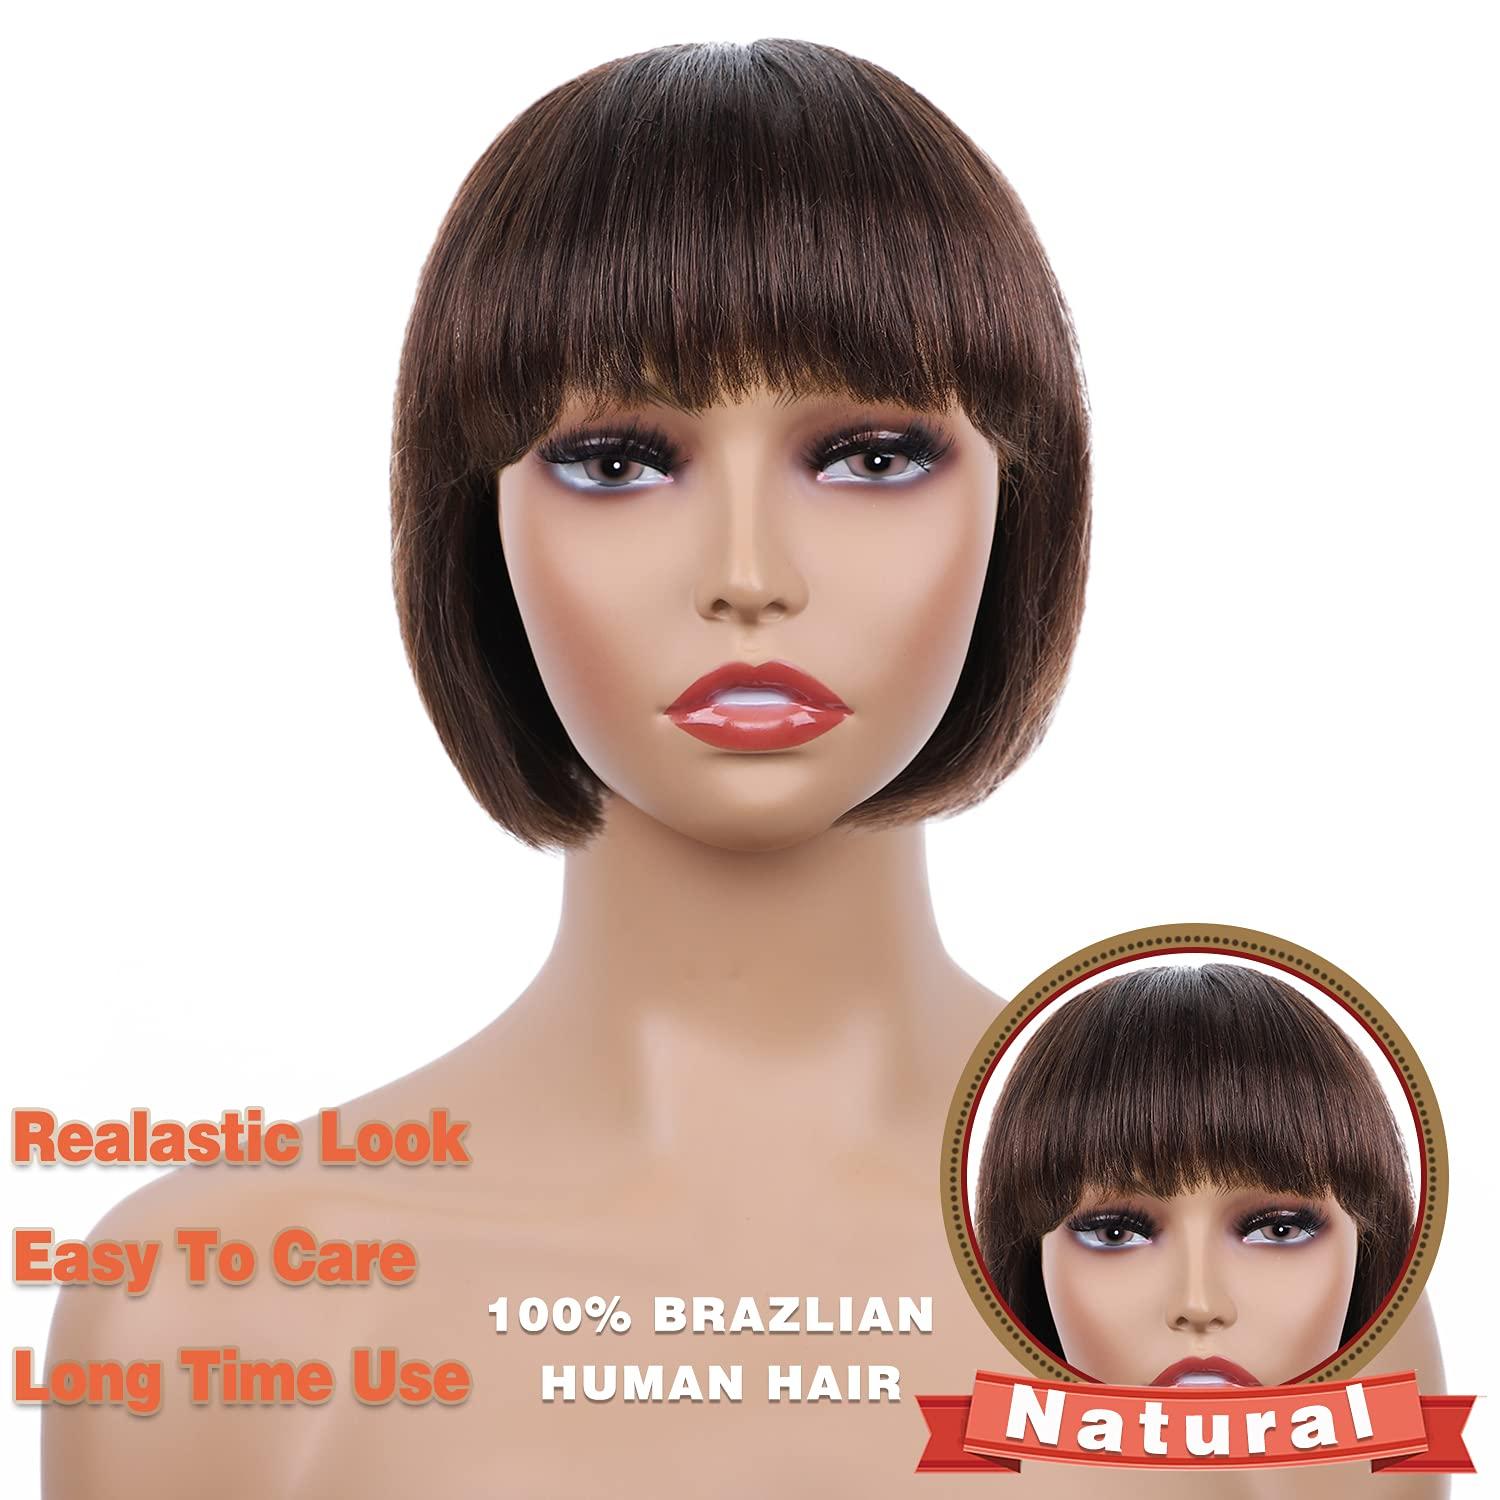 Short Bob Human Hair Wigs - Brazilian Virgin Human Hair Wigs with Bangs  Natural Hairline Short Straight Hair Wig Caps for Black Women (KINKYS  MISSMIZZ) 8 Inch 4